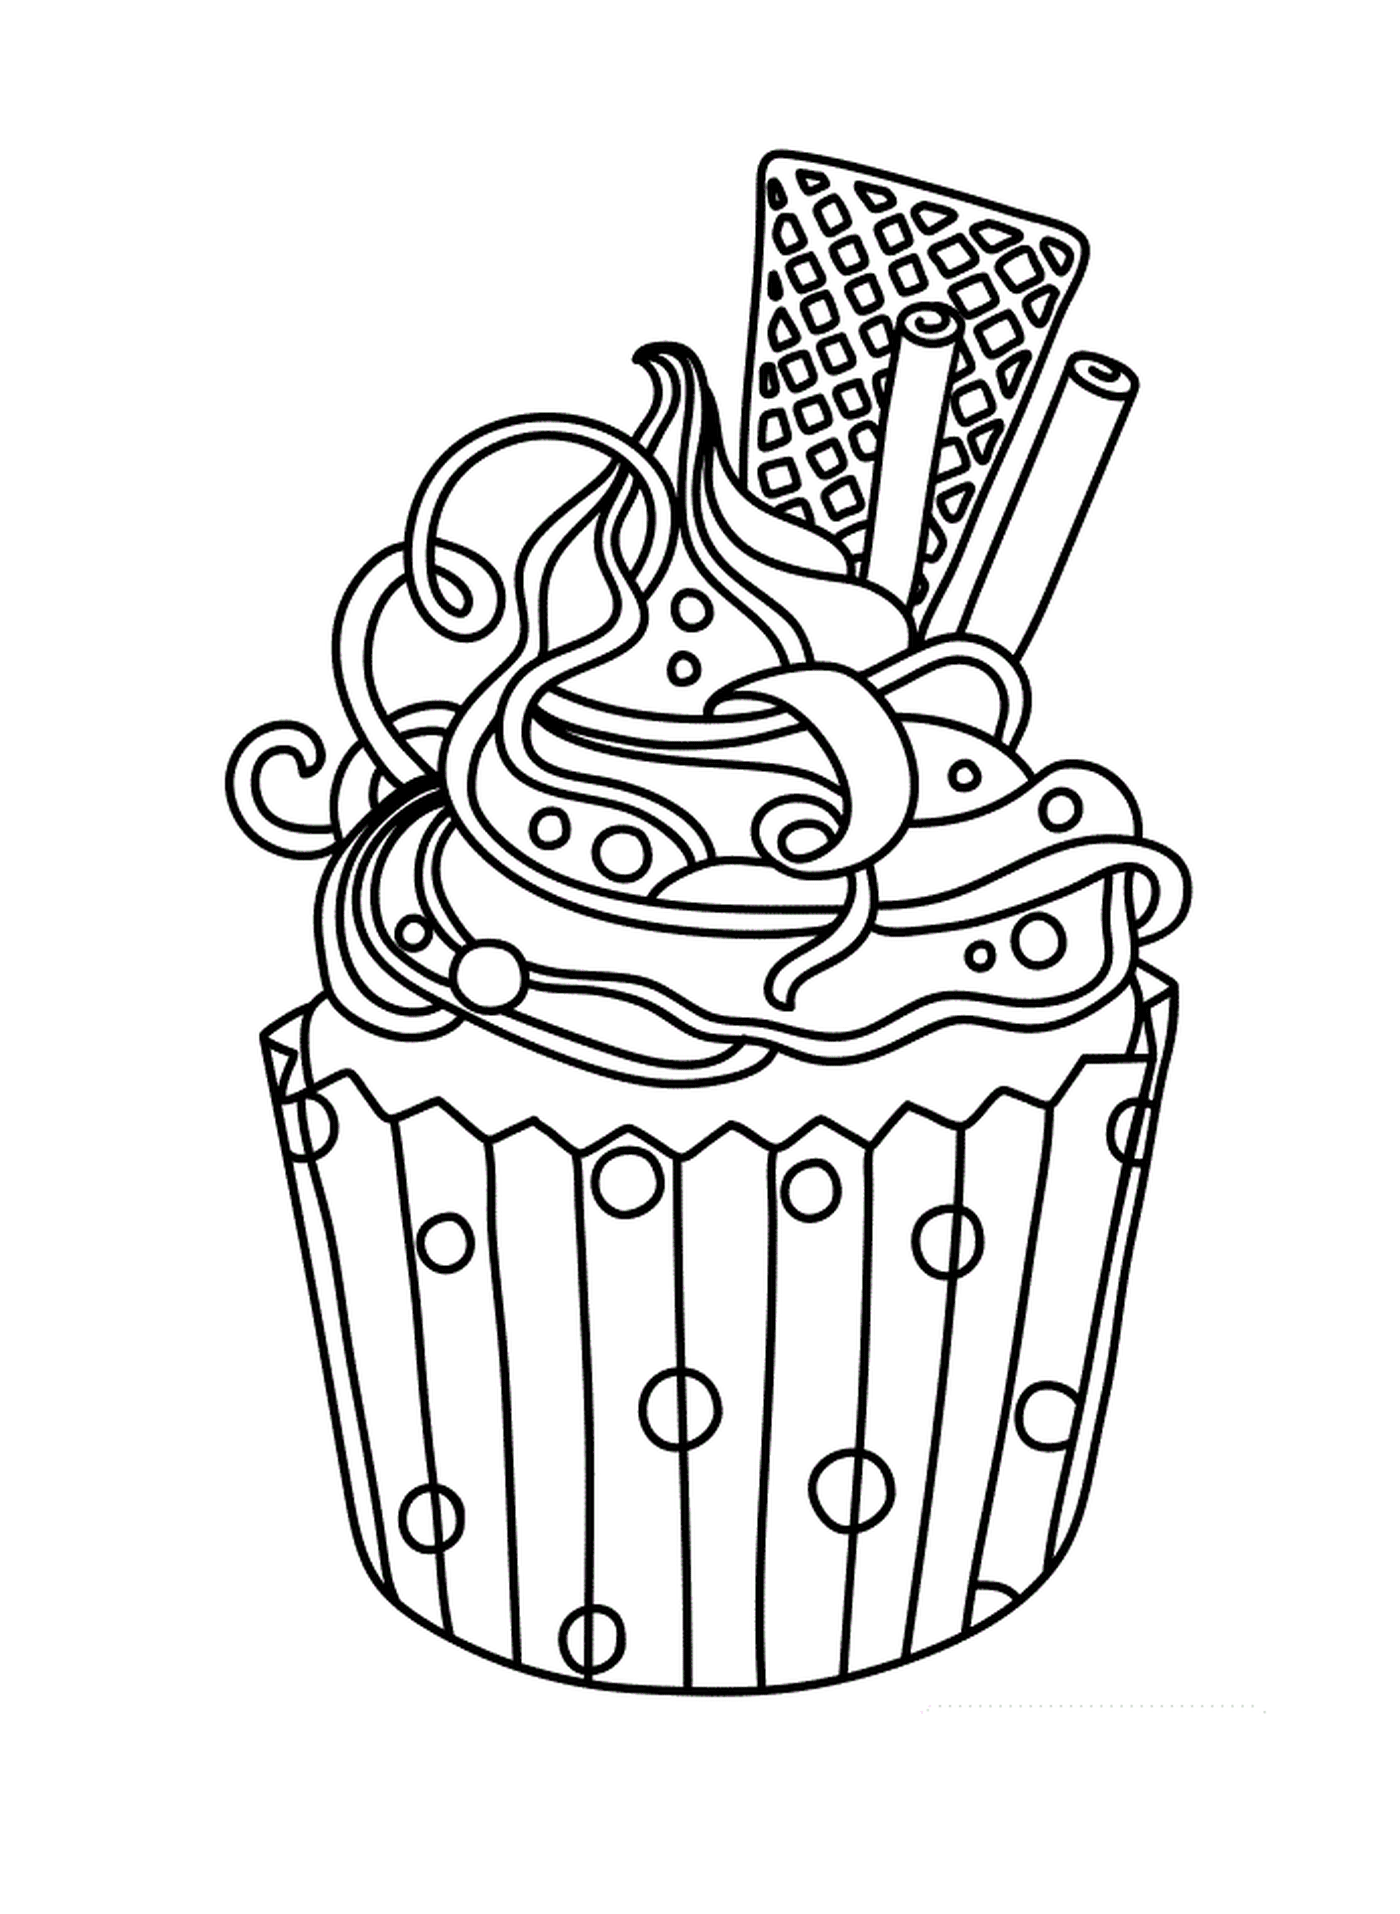  A coloured cupcake 